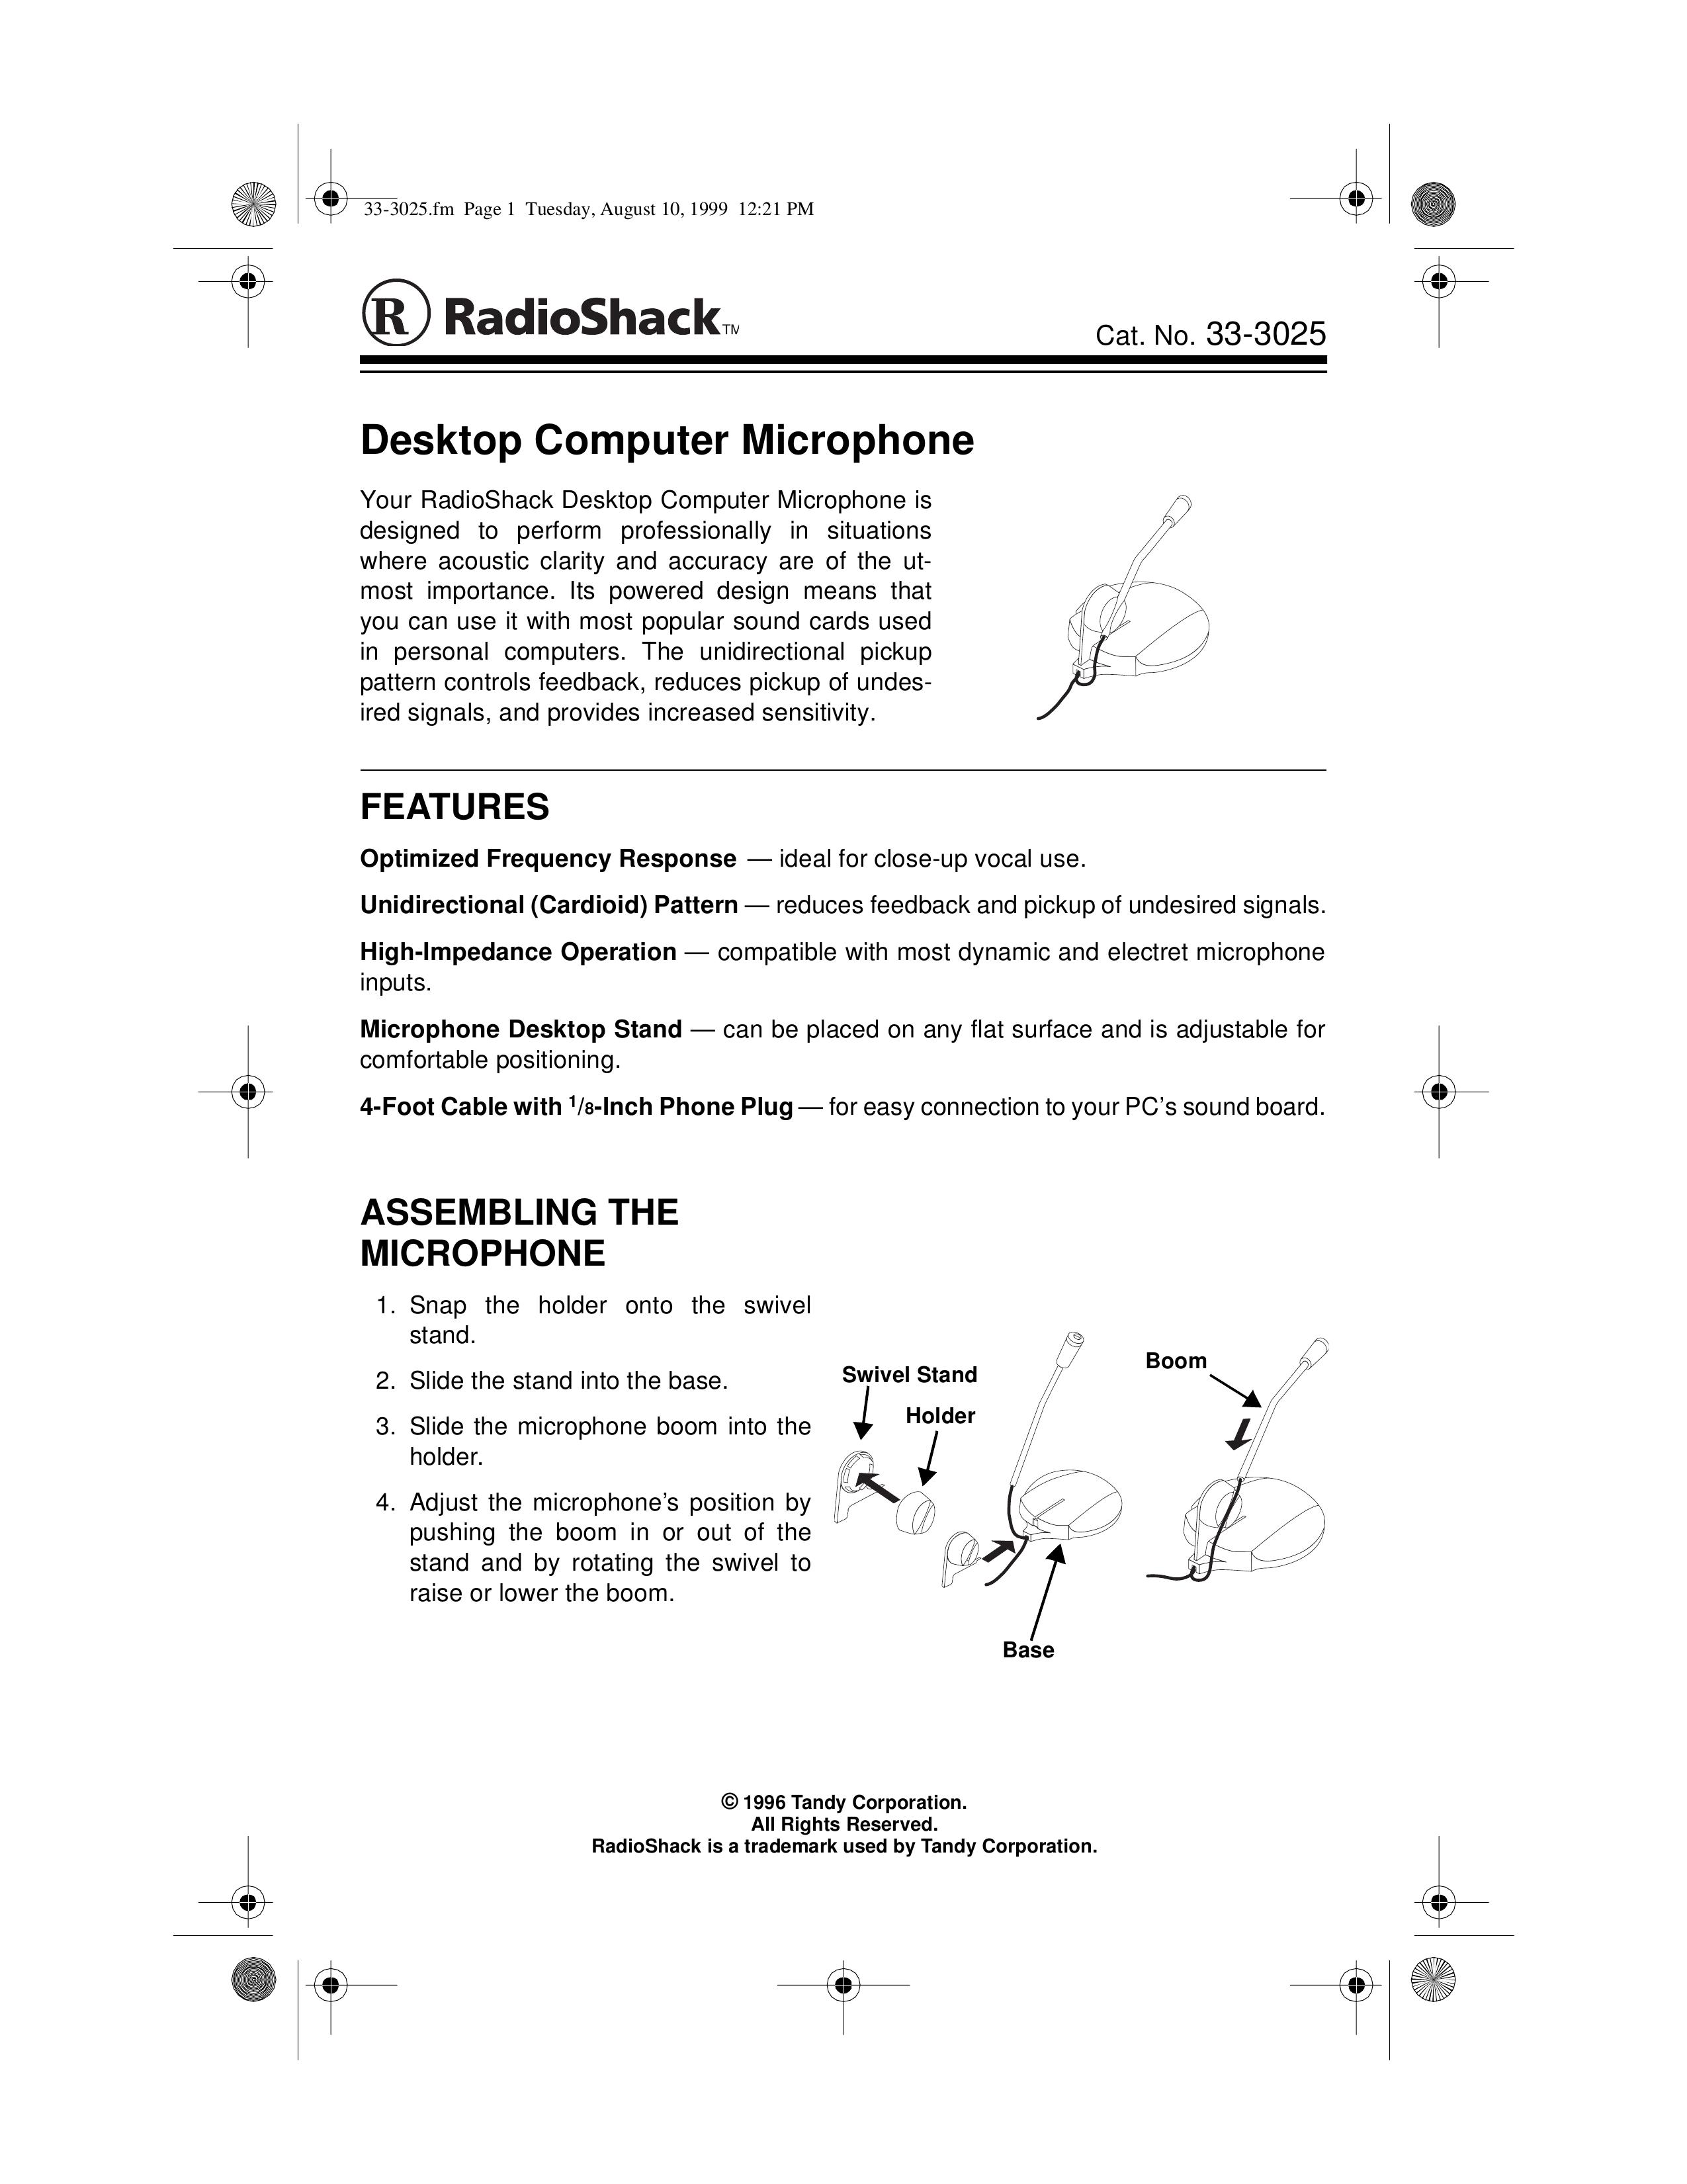 Radio Shack 33-3025 Microphone User Manual